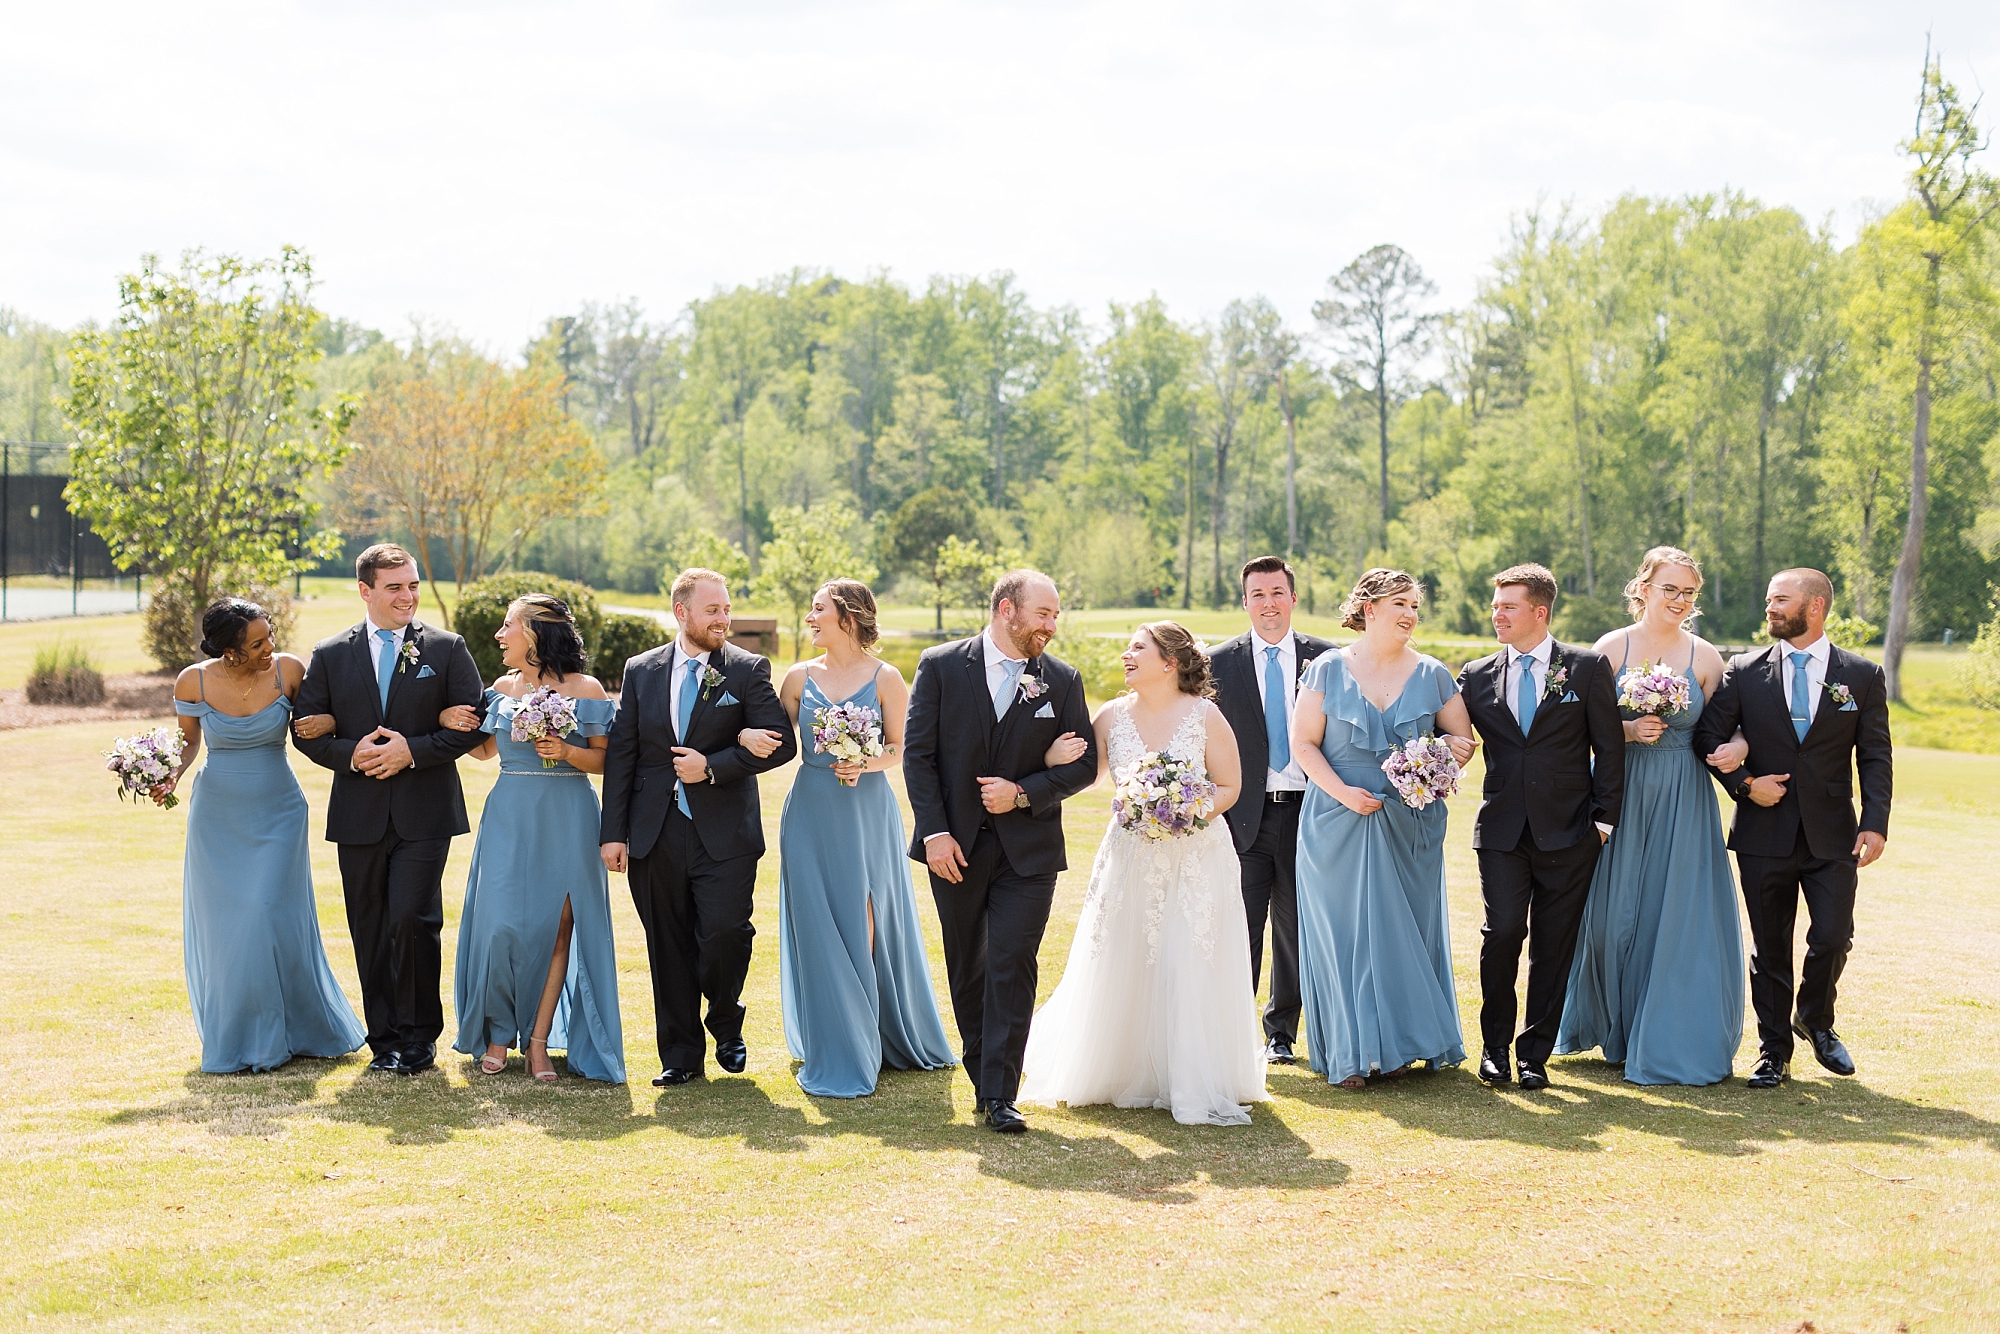 wedding party walking arm in arm - Raleigh NC Wedding Photographer - Sarah Hinckley Photography